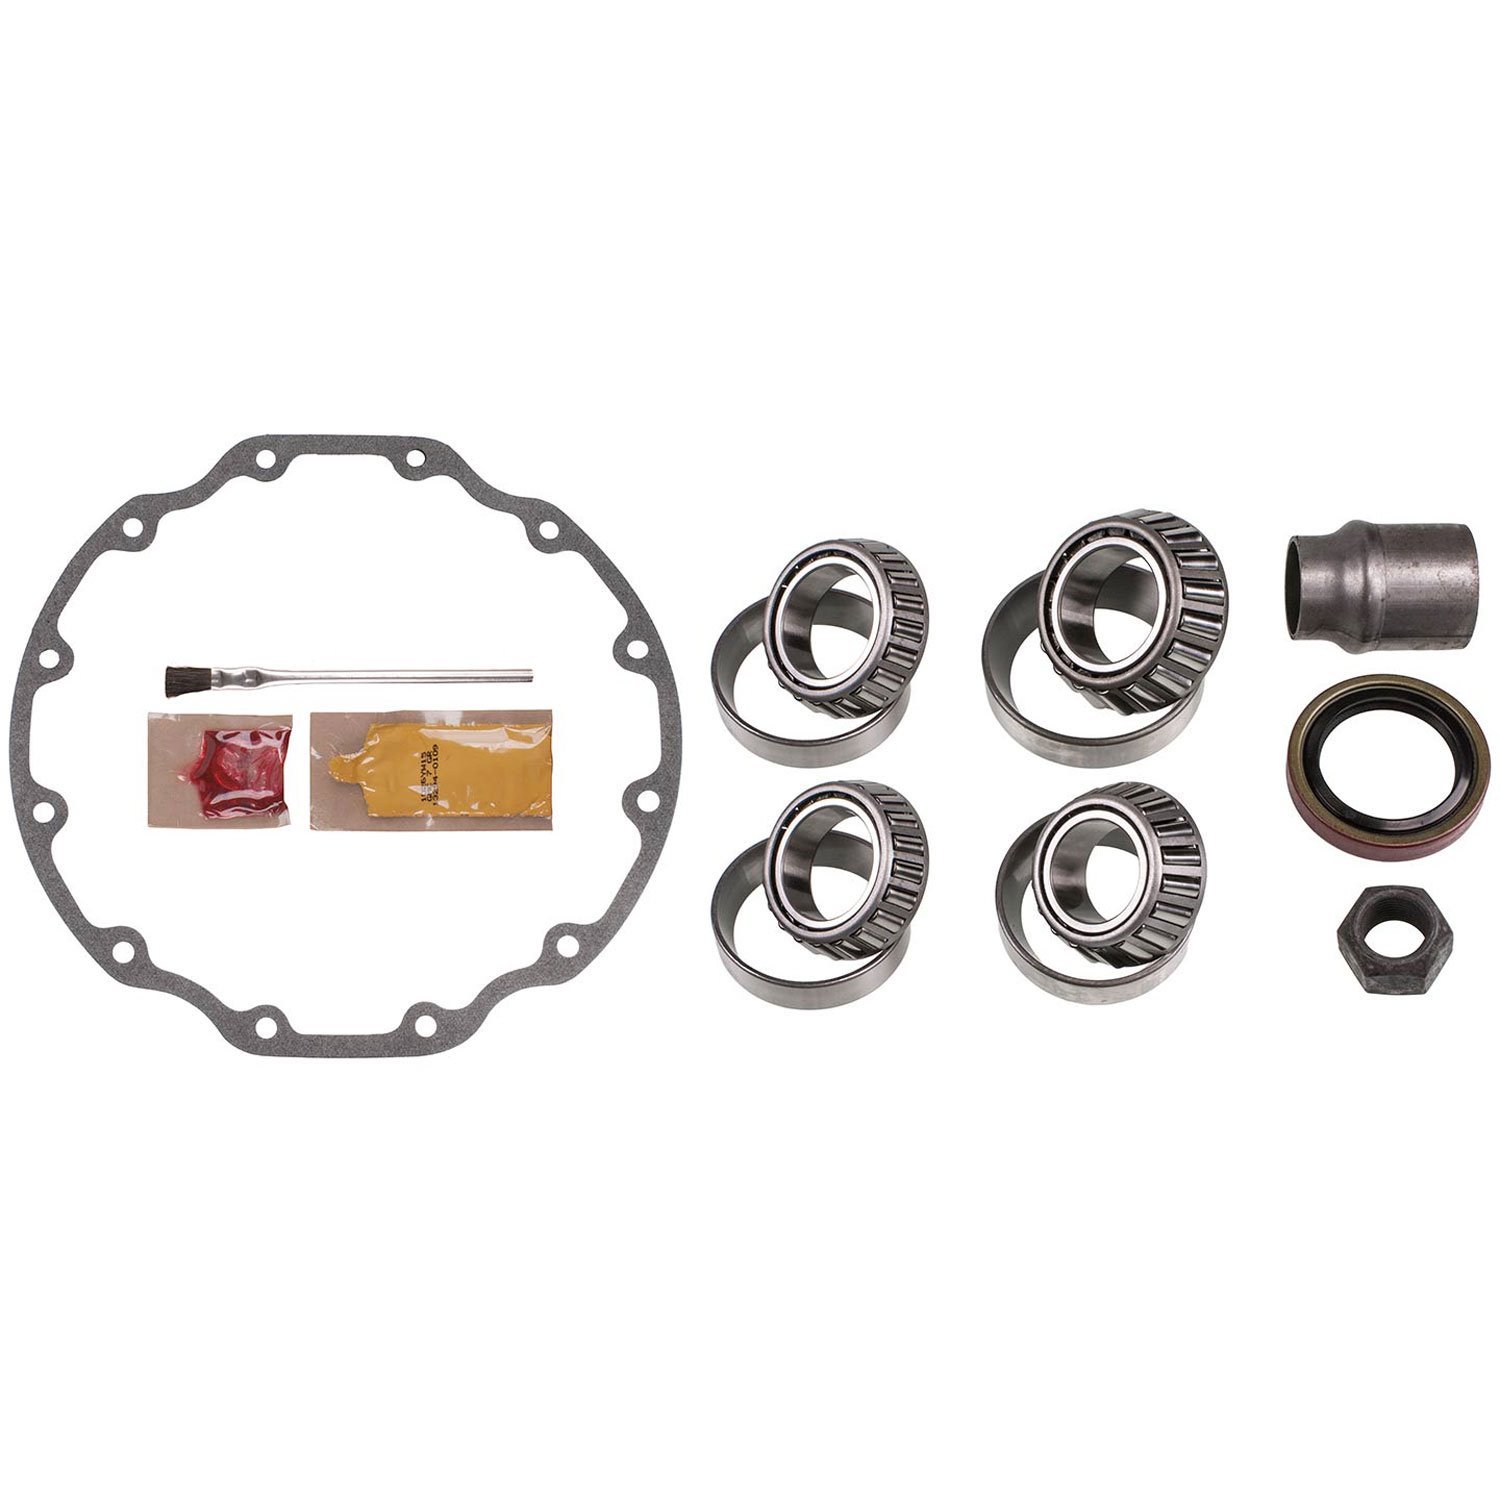 Differential Bearing Kit GM 8.5 in. O Axle 12-bolt - Koyo Bearings